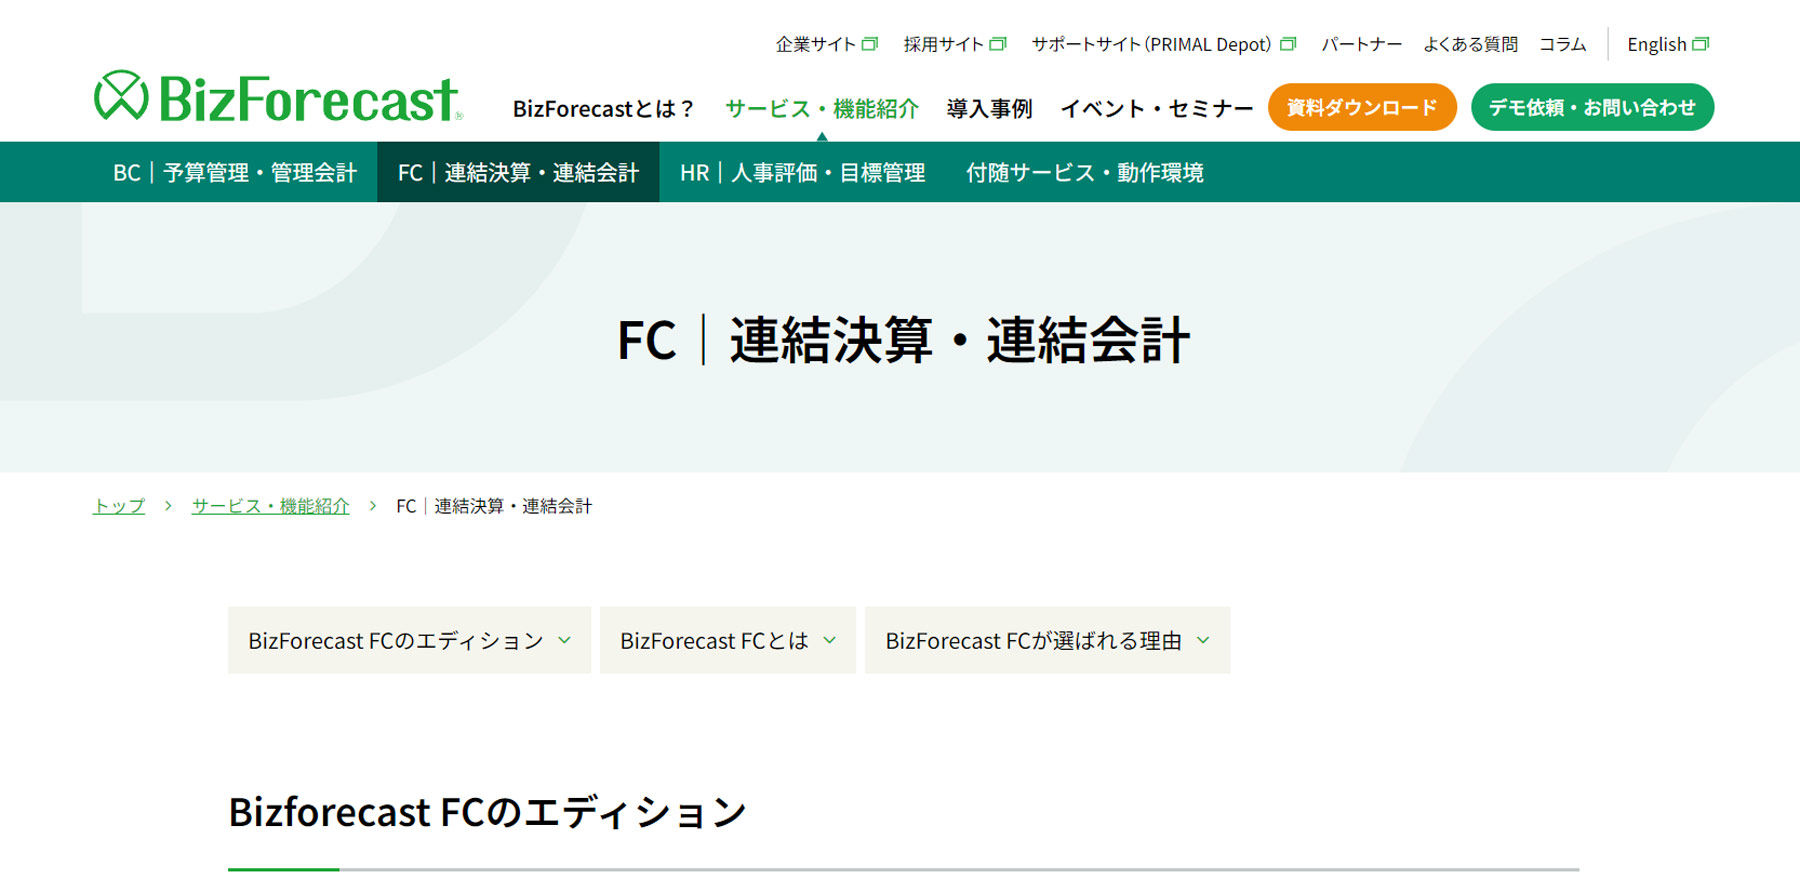 BizForecast FC公式Webサイト